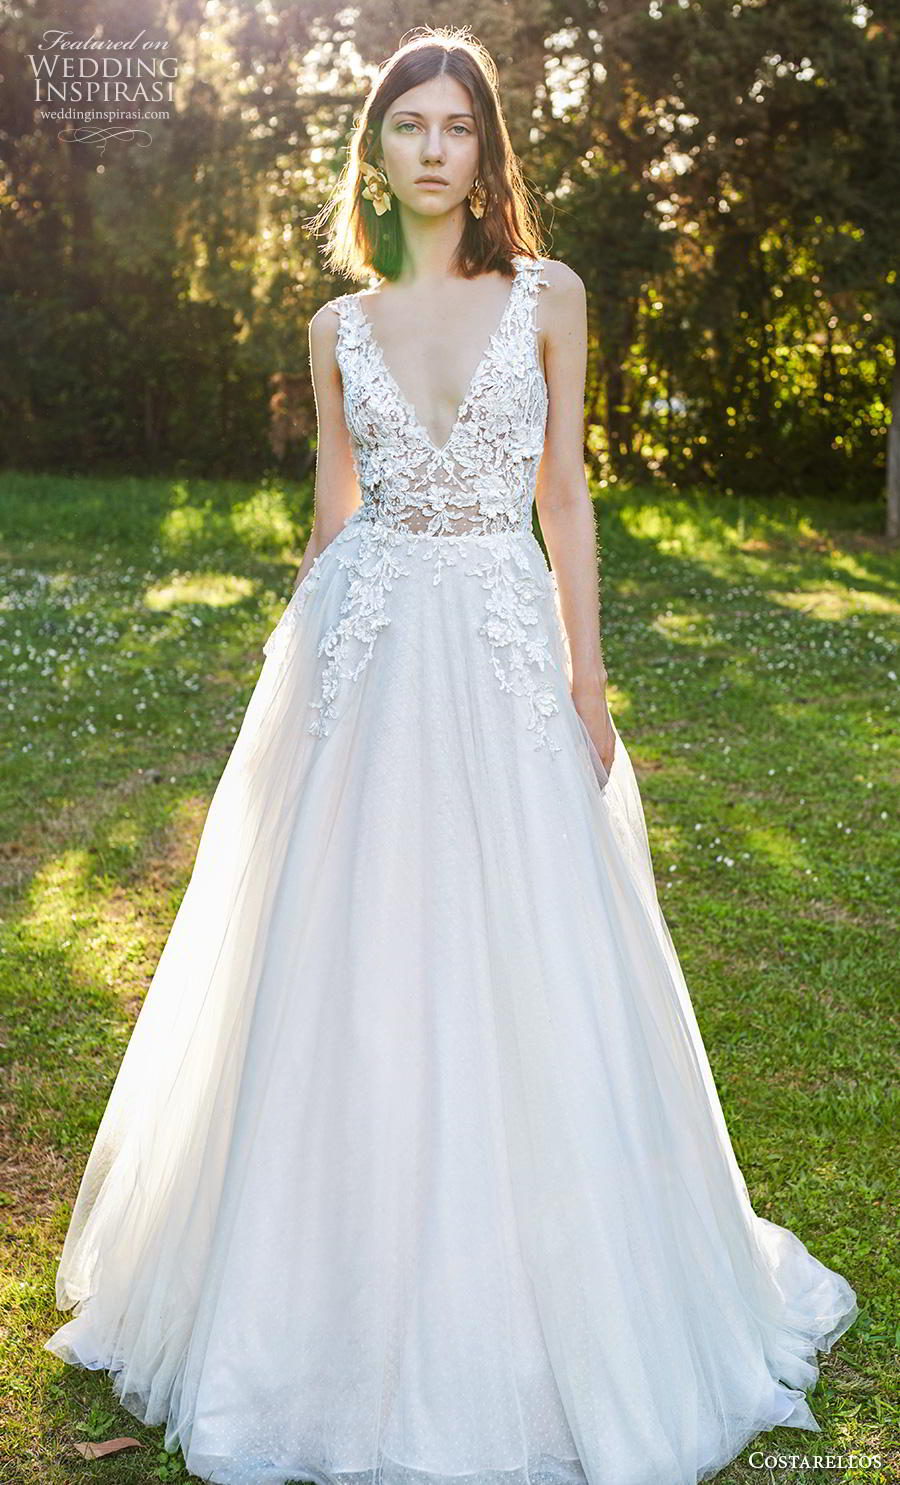 Costarellos Spring 2019 Wedding Dresses | Wedding Inspirasi